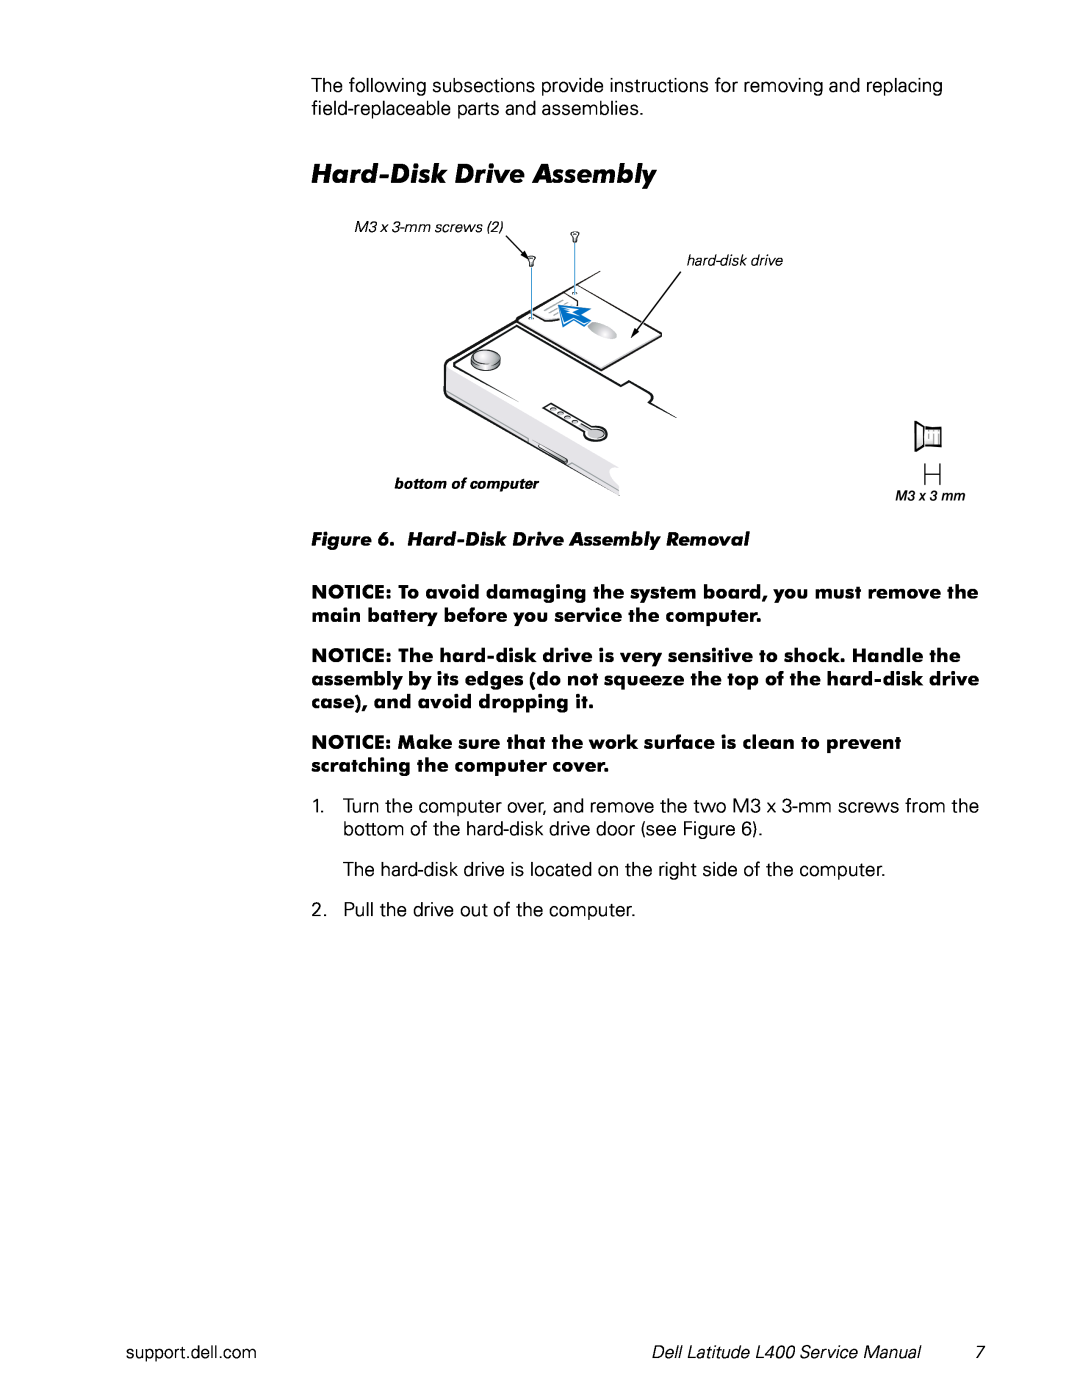 Dell L400 service manual Hard-DiskDrive Assembly Removal 